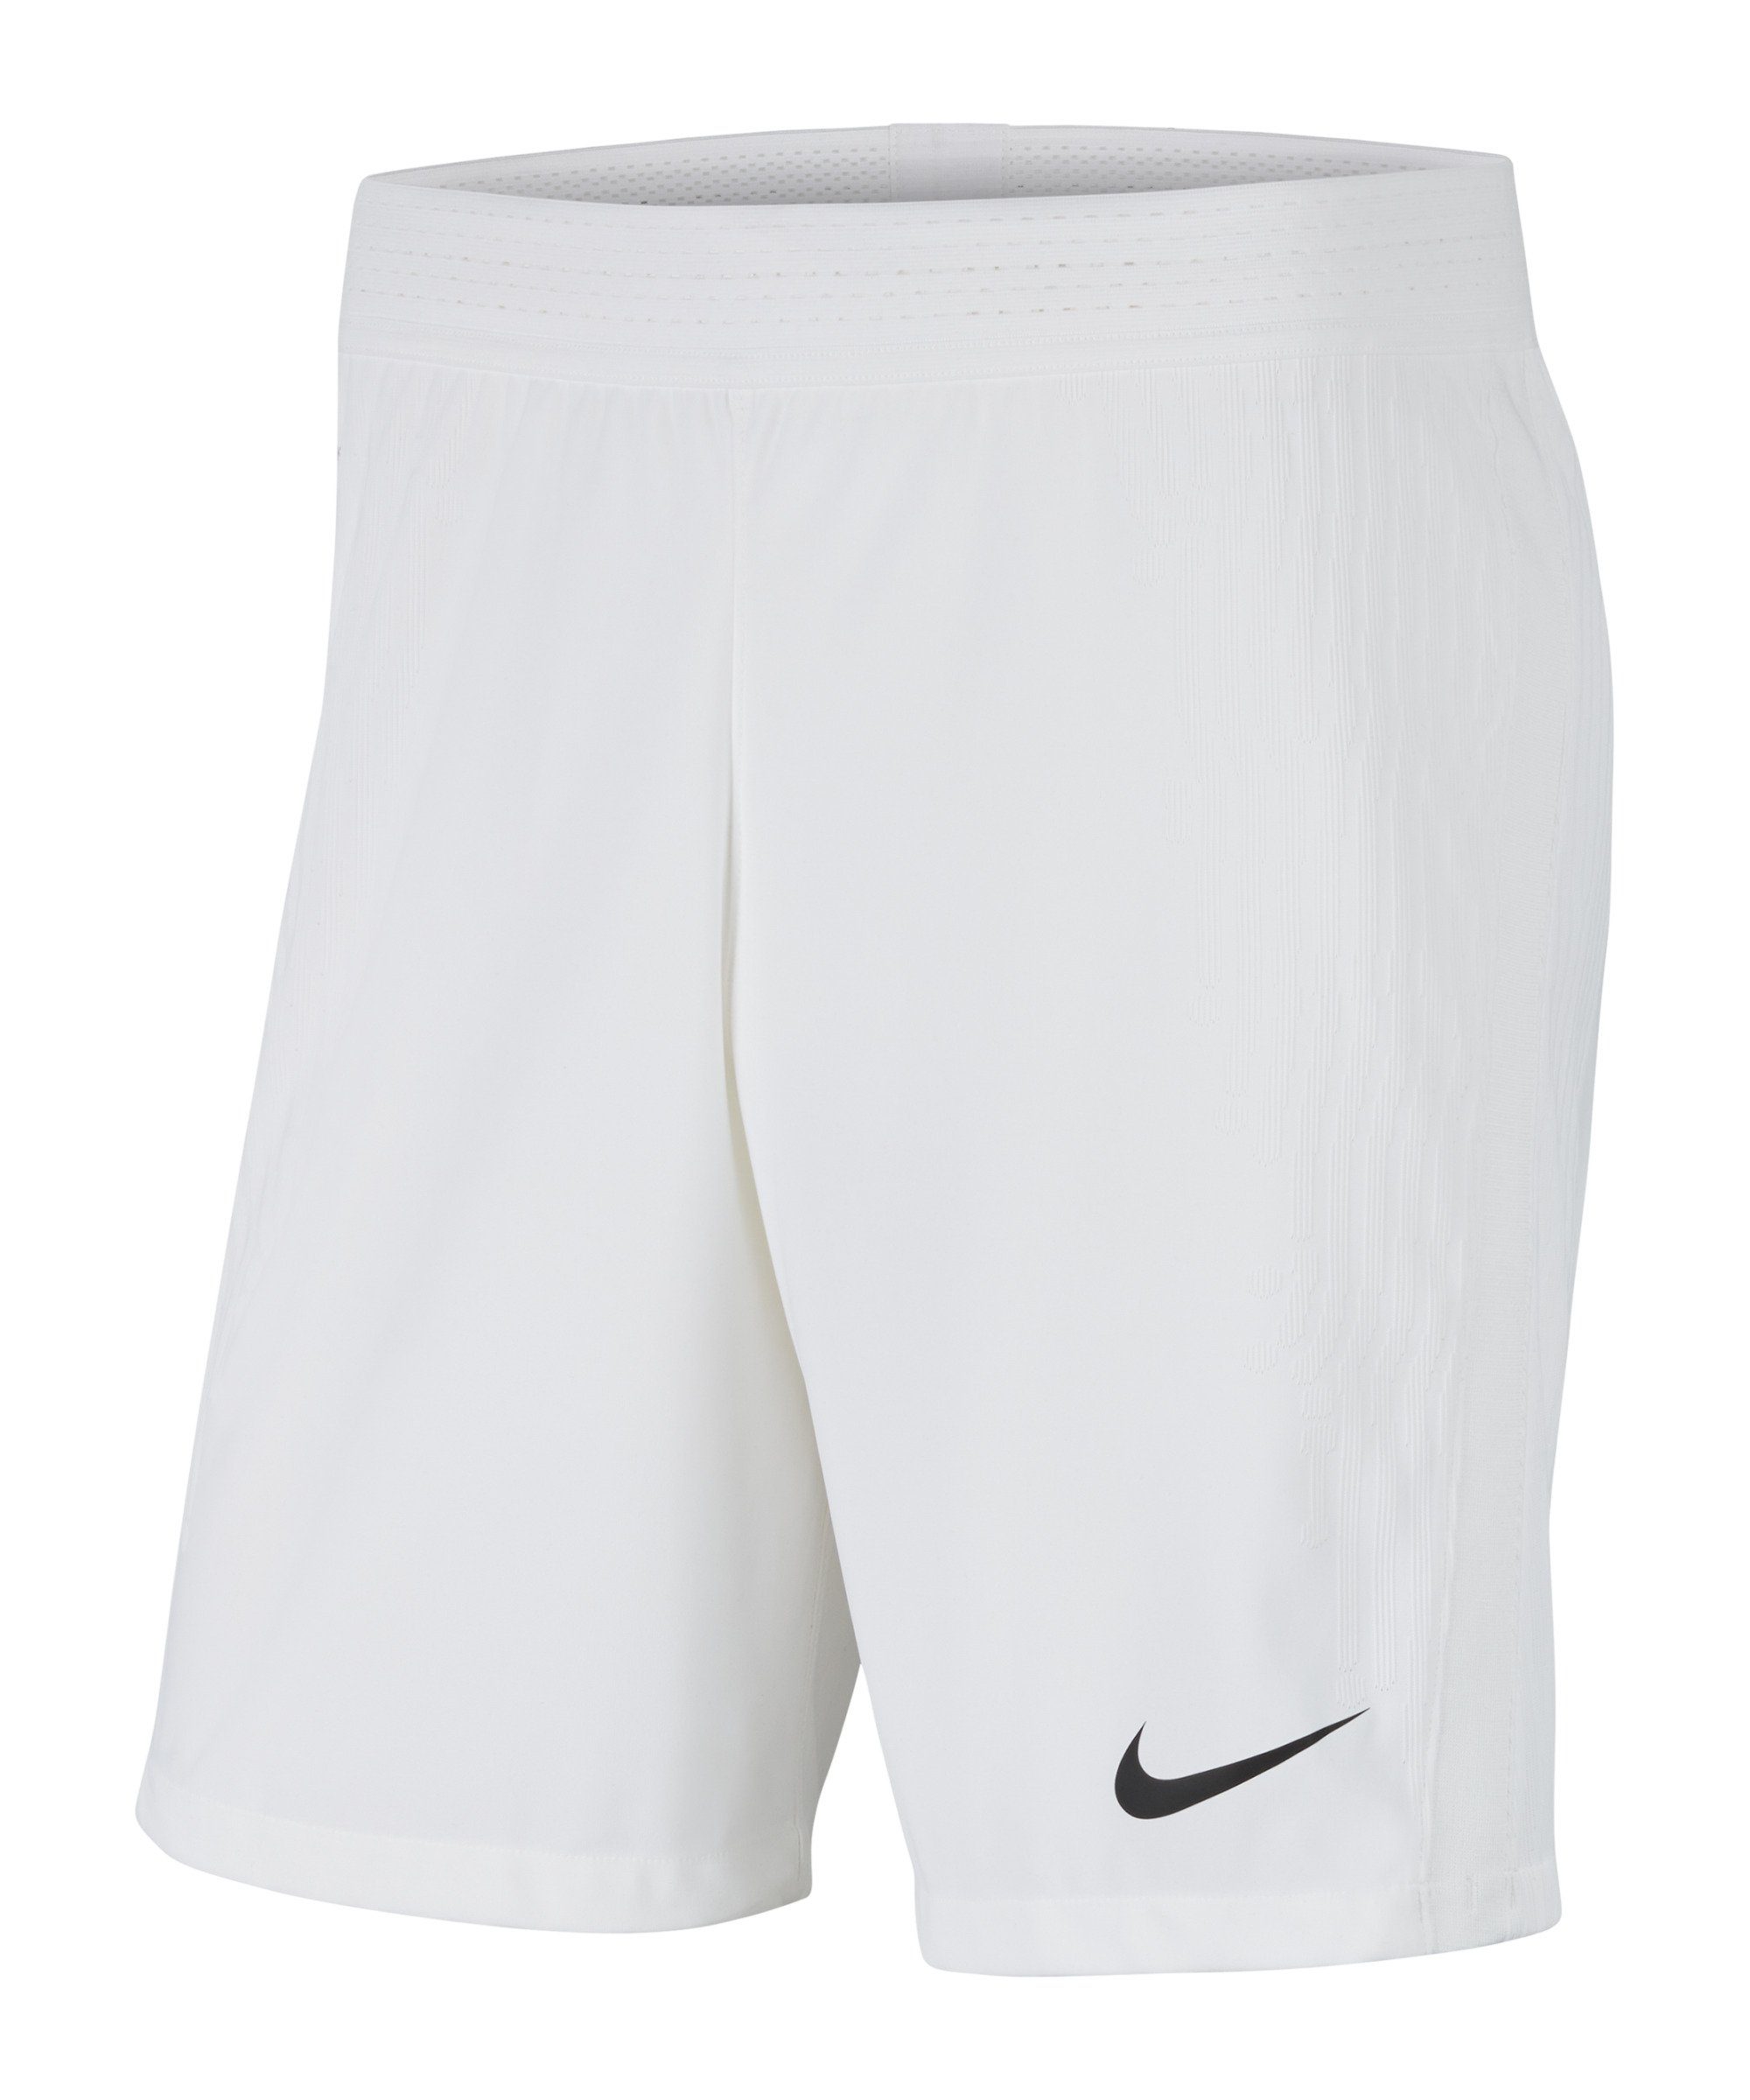 Nike Sporthose Vapor Knit III Short weissschwarz